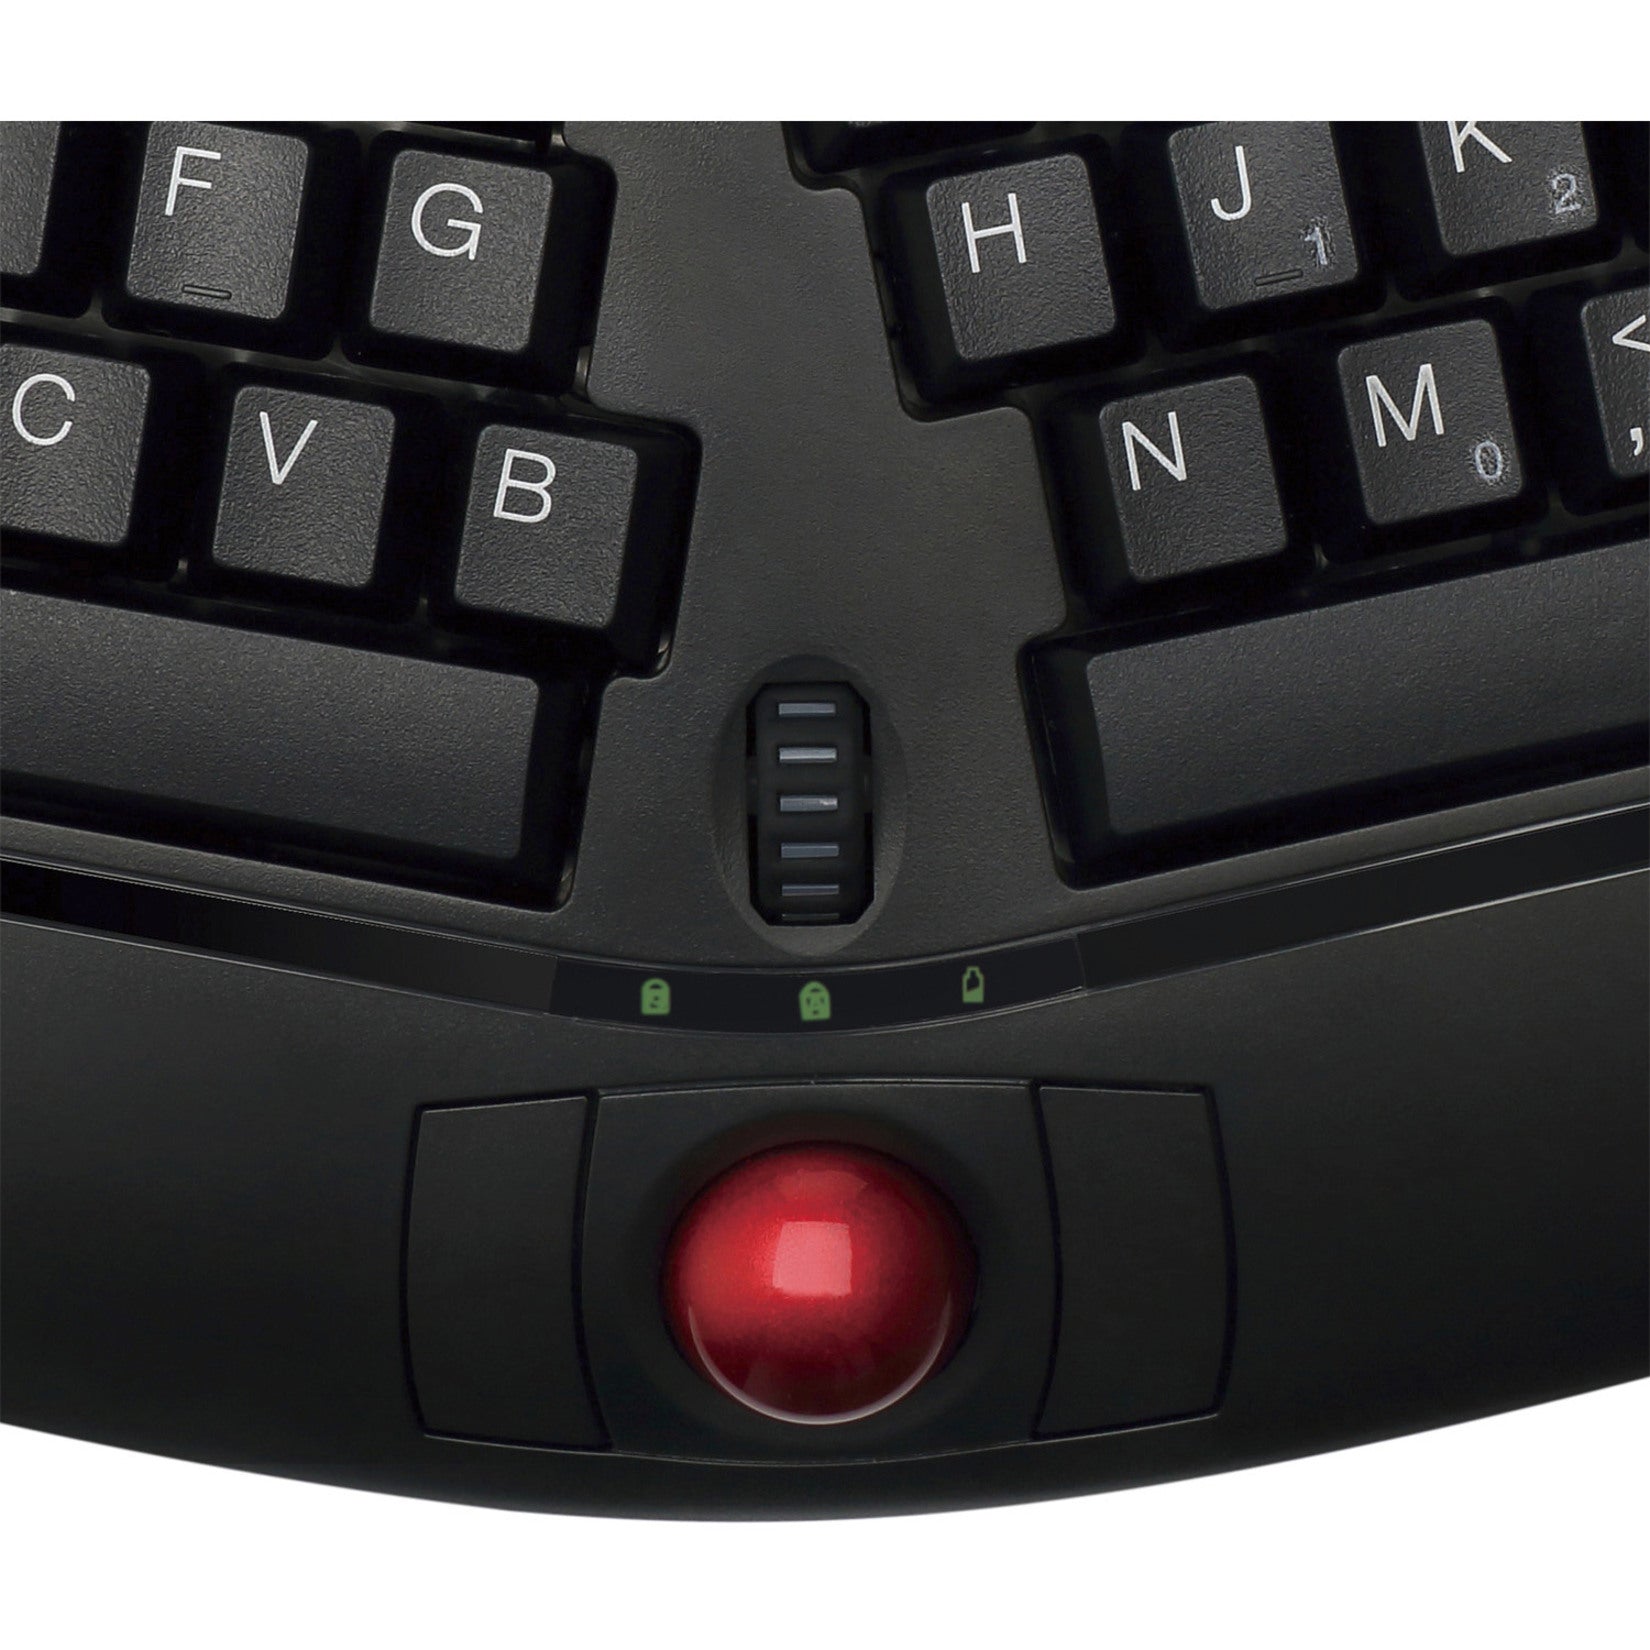 Adesso WKB-3150UB Tru-Form Media 3150 Wireless Ergo Trackball Keyboard 2.4 GHz Split Layout Palm Rest  アデッソ　WKB-3150UB トゥル-フォーム メディア 3150 ワイヤレス エルゴ トラックボール キーボード、2.4 GHz、スプリット レイアウト、パーム レスト